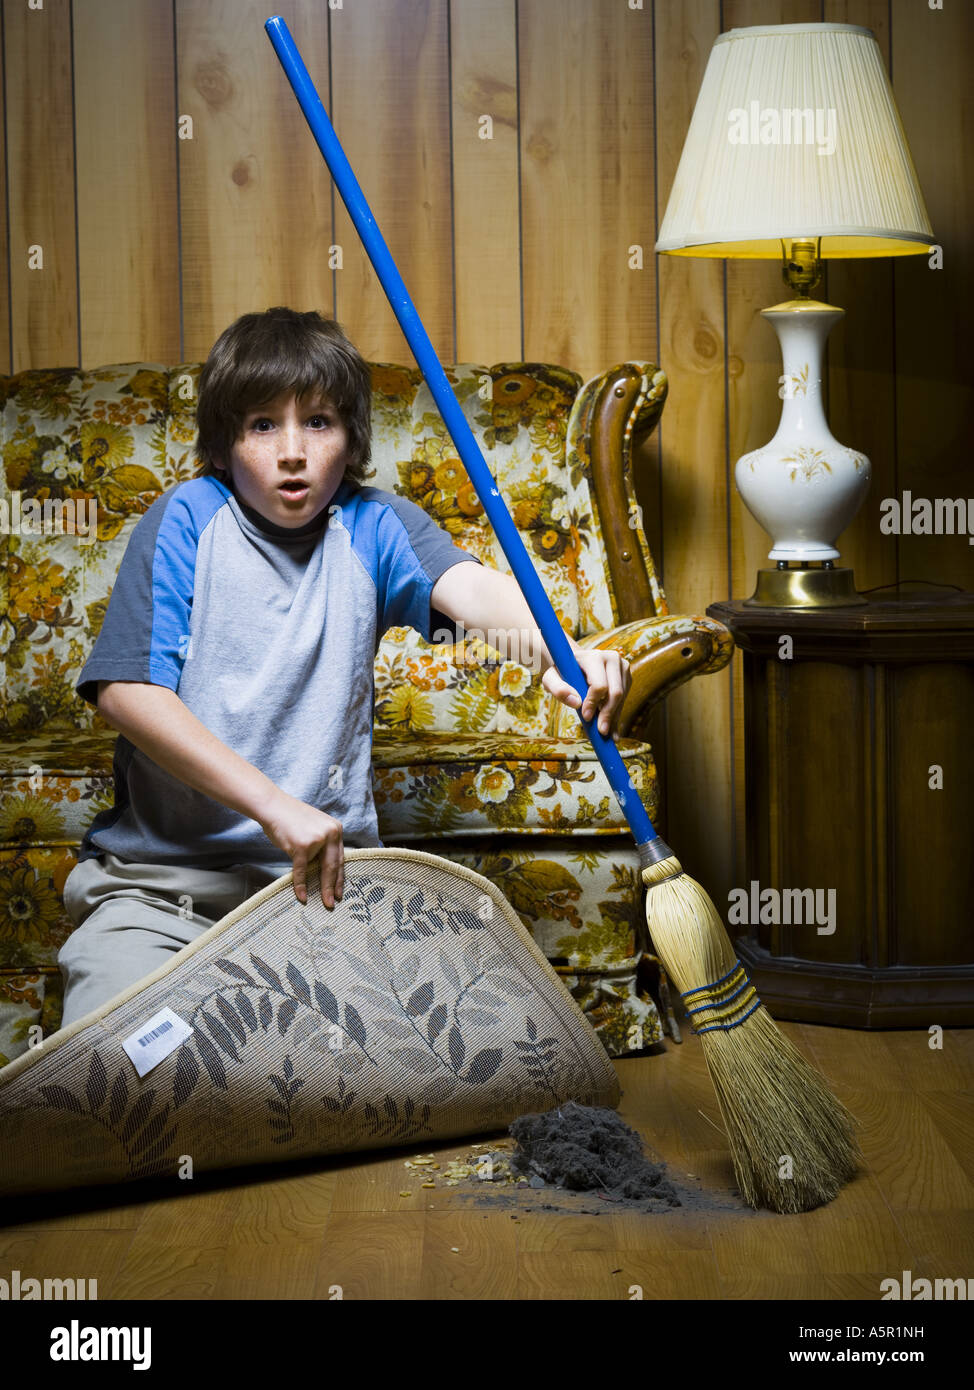 Boy sweeping dirt under rug Stock Photo - Alamy